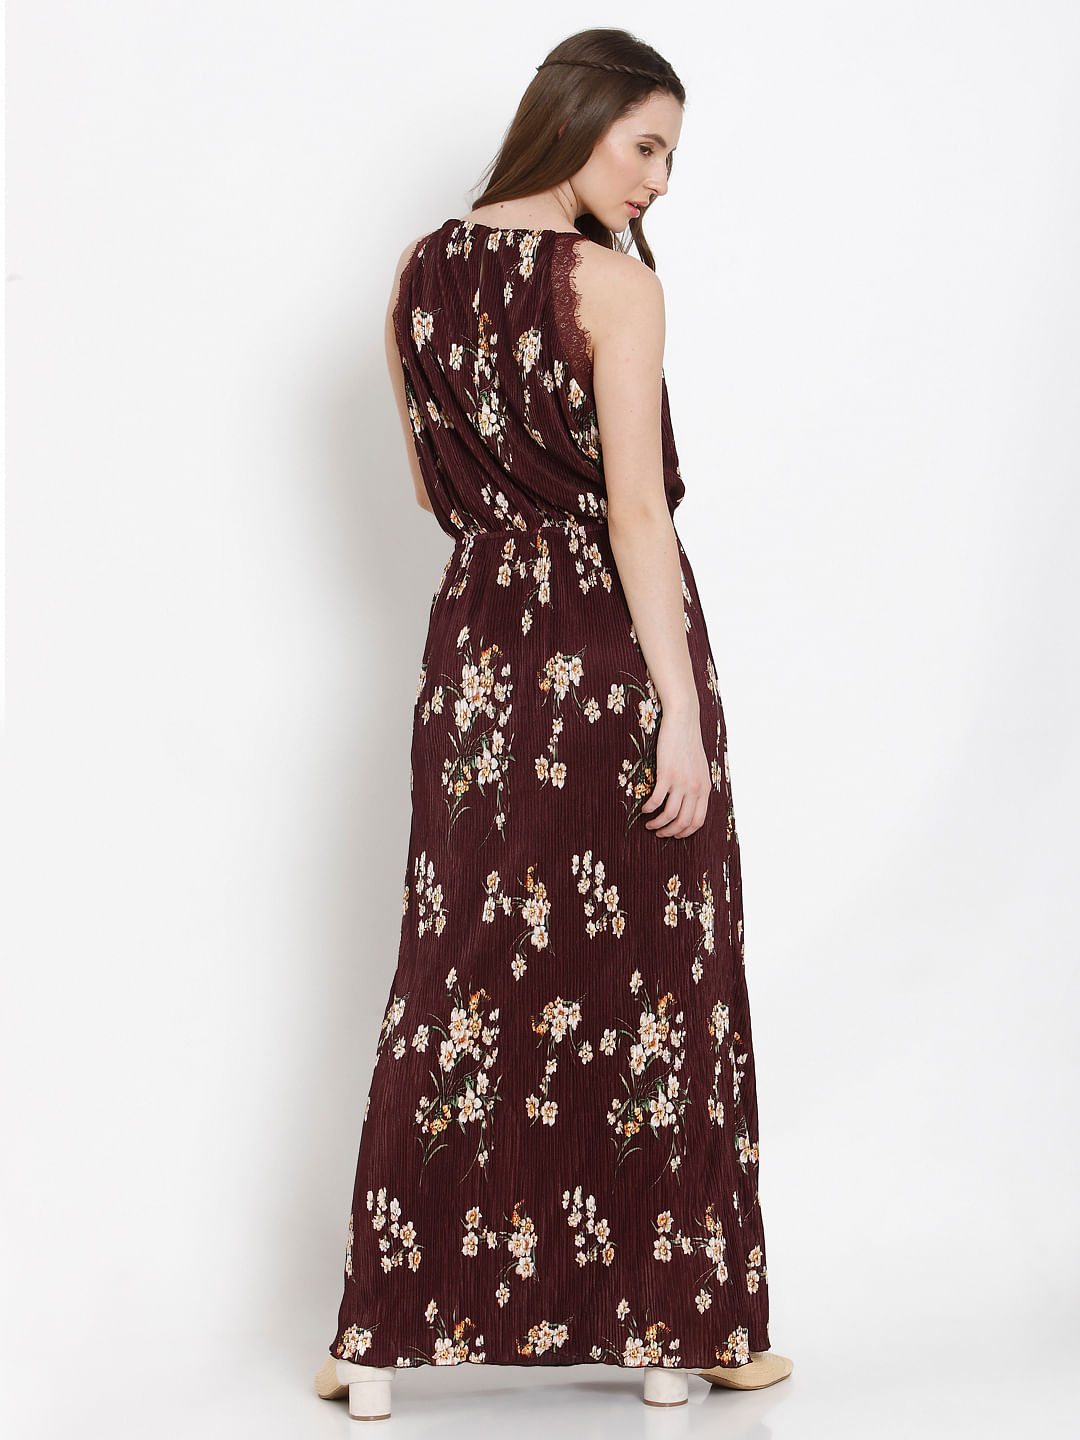 floral maroon dress